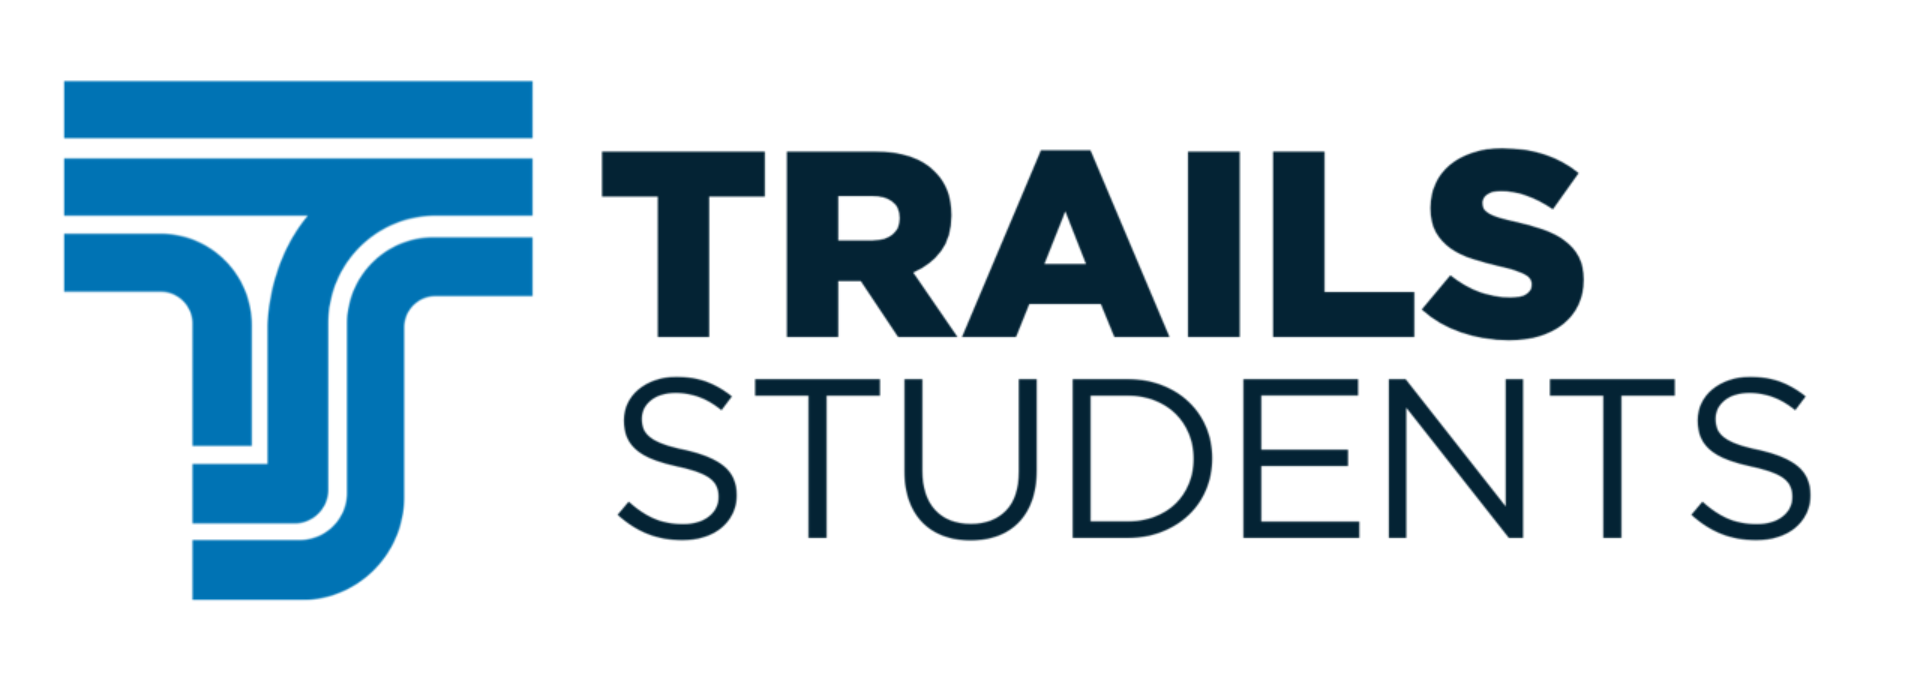 Trails Students Horizontal Logo 2023_1920x692